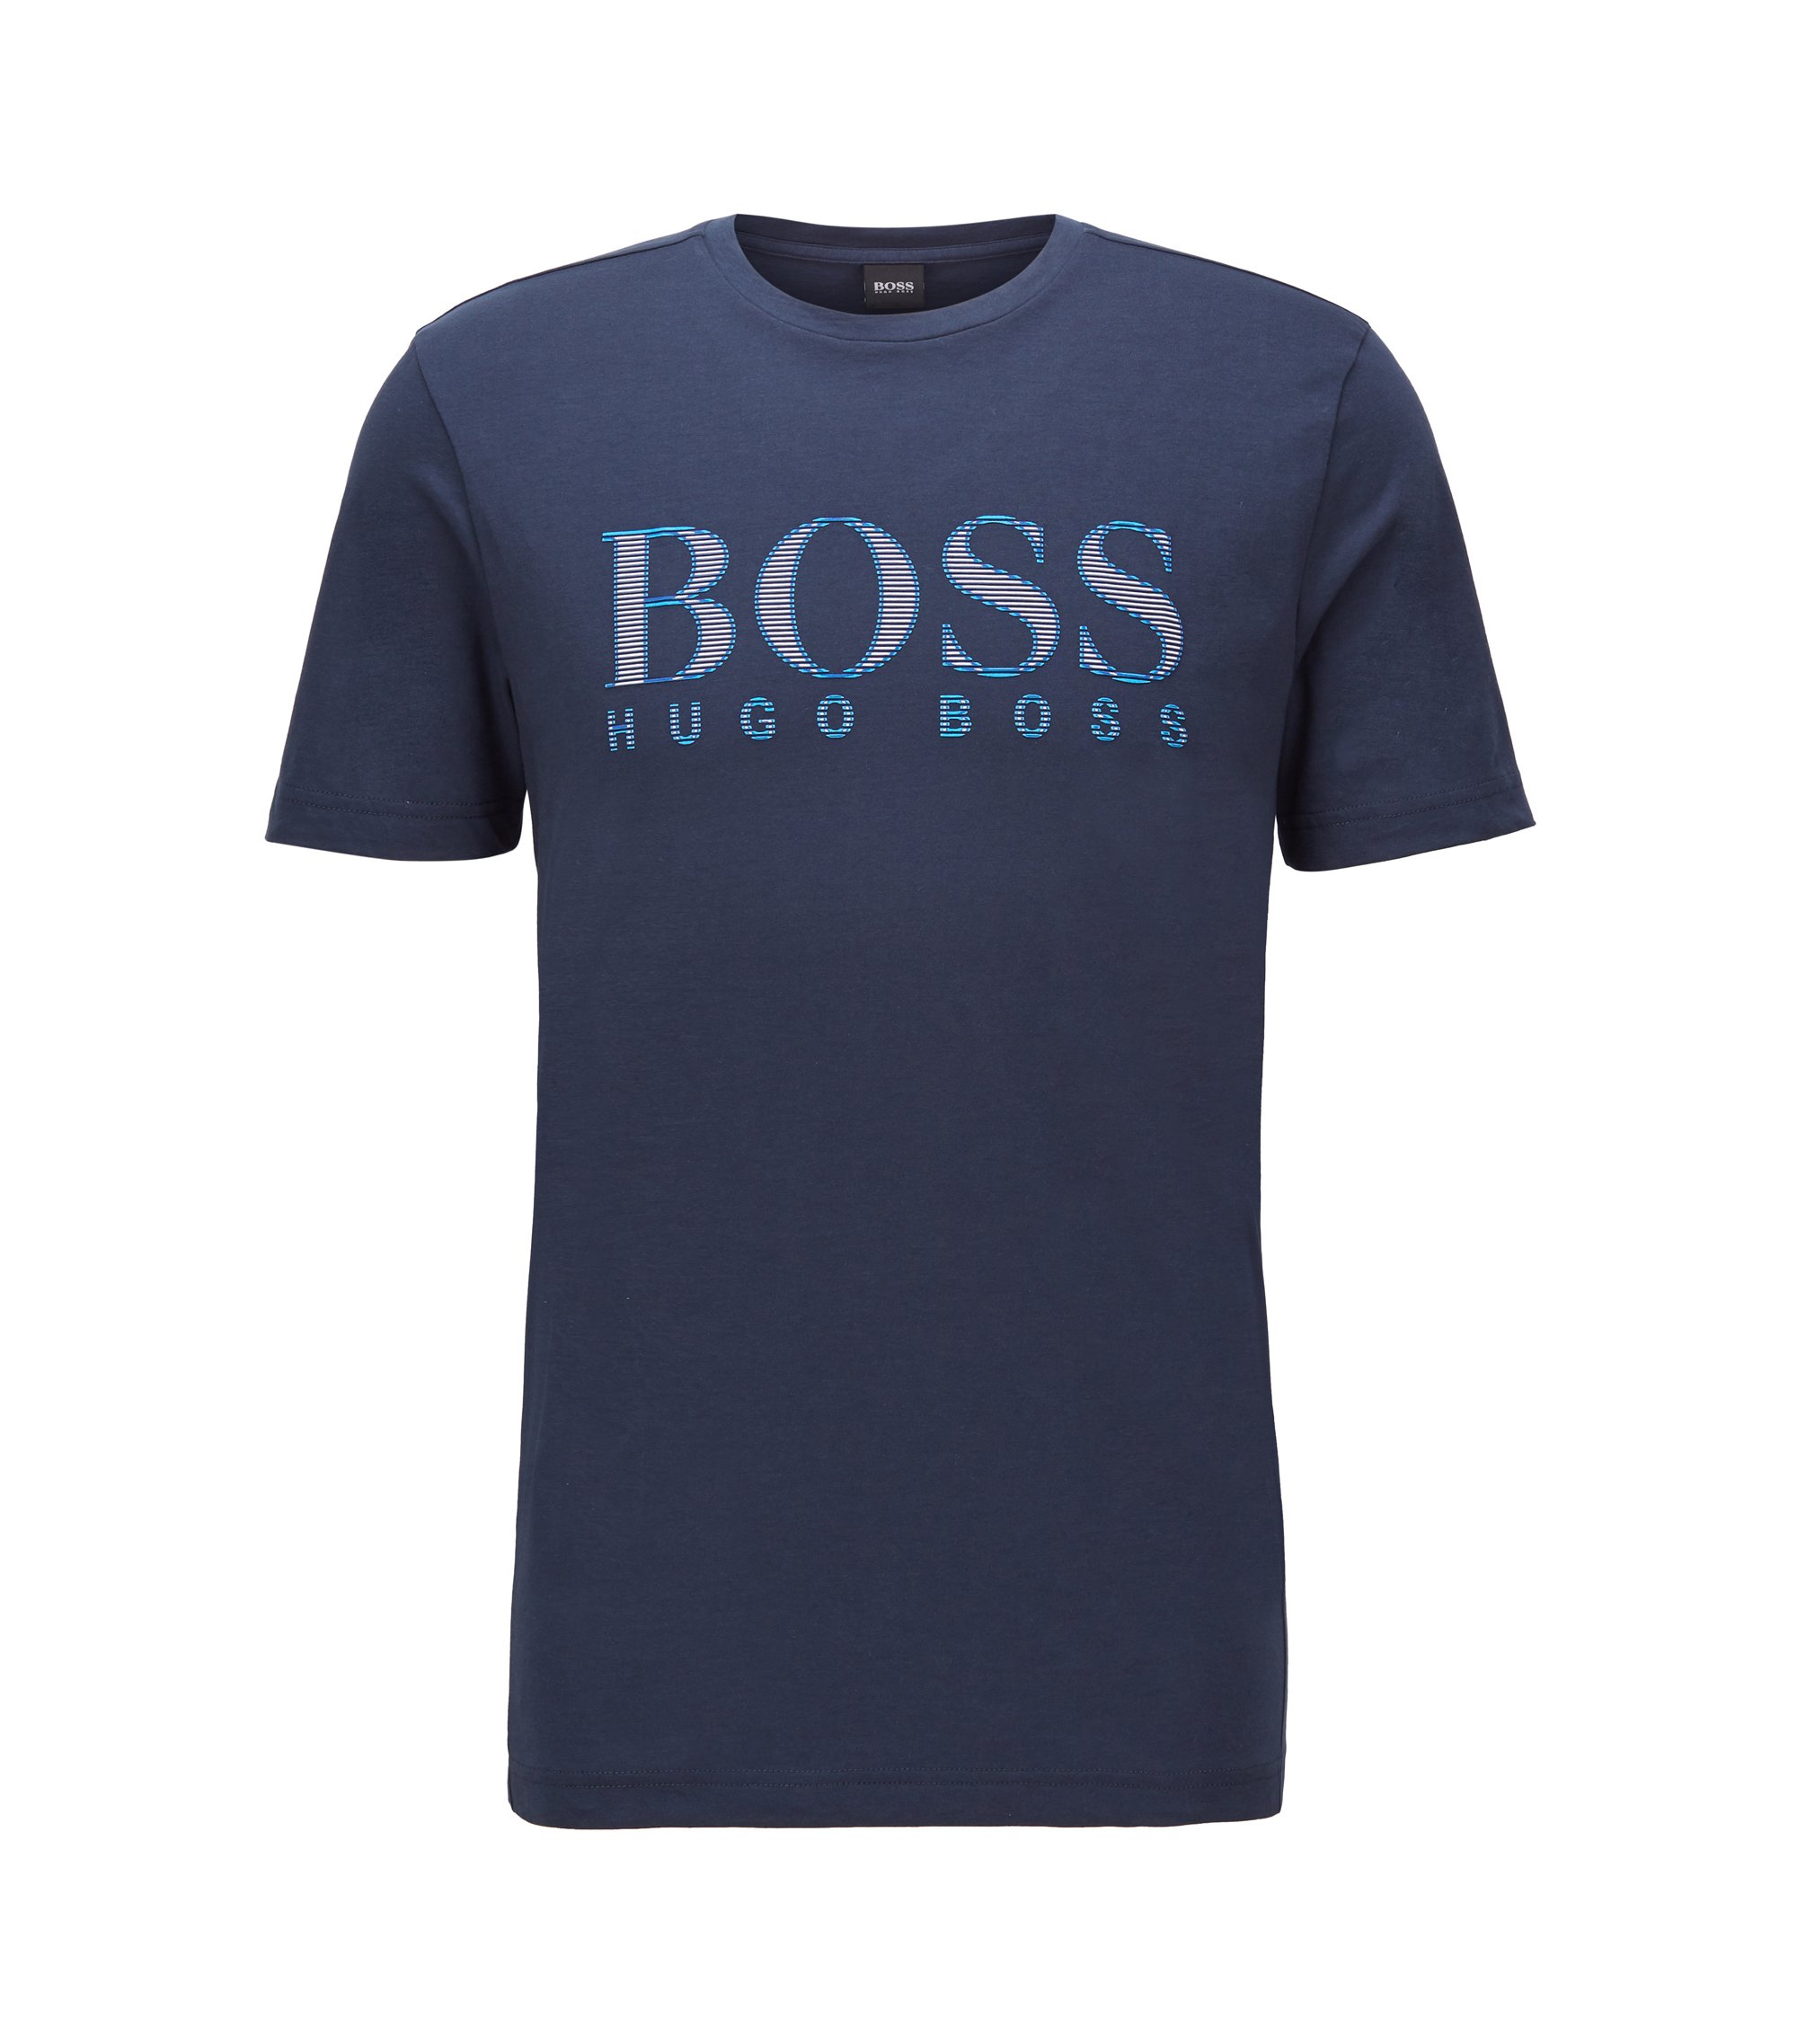 Hugo Boss Teecher 4 Cotton Printed Logo Orange T-Shirt